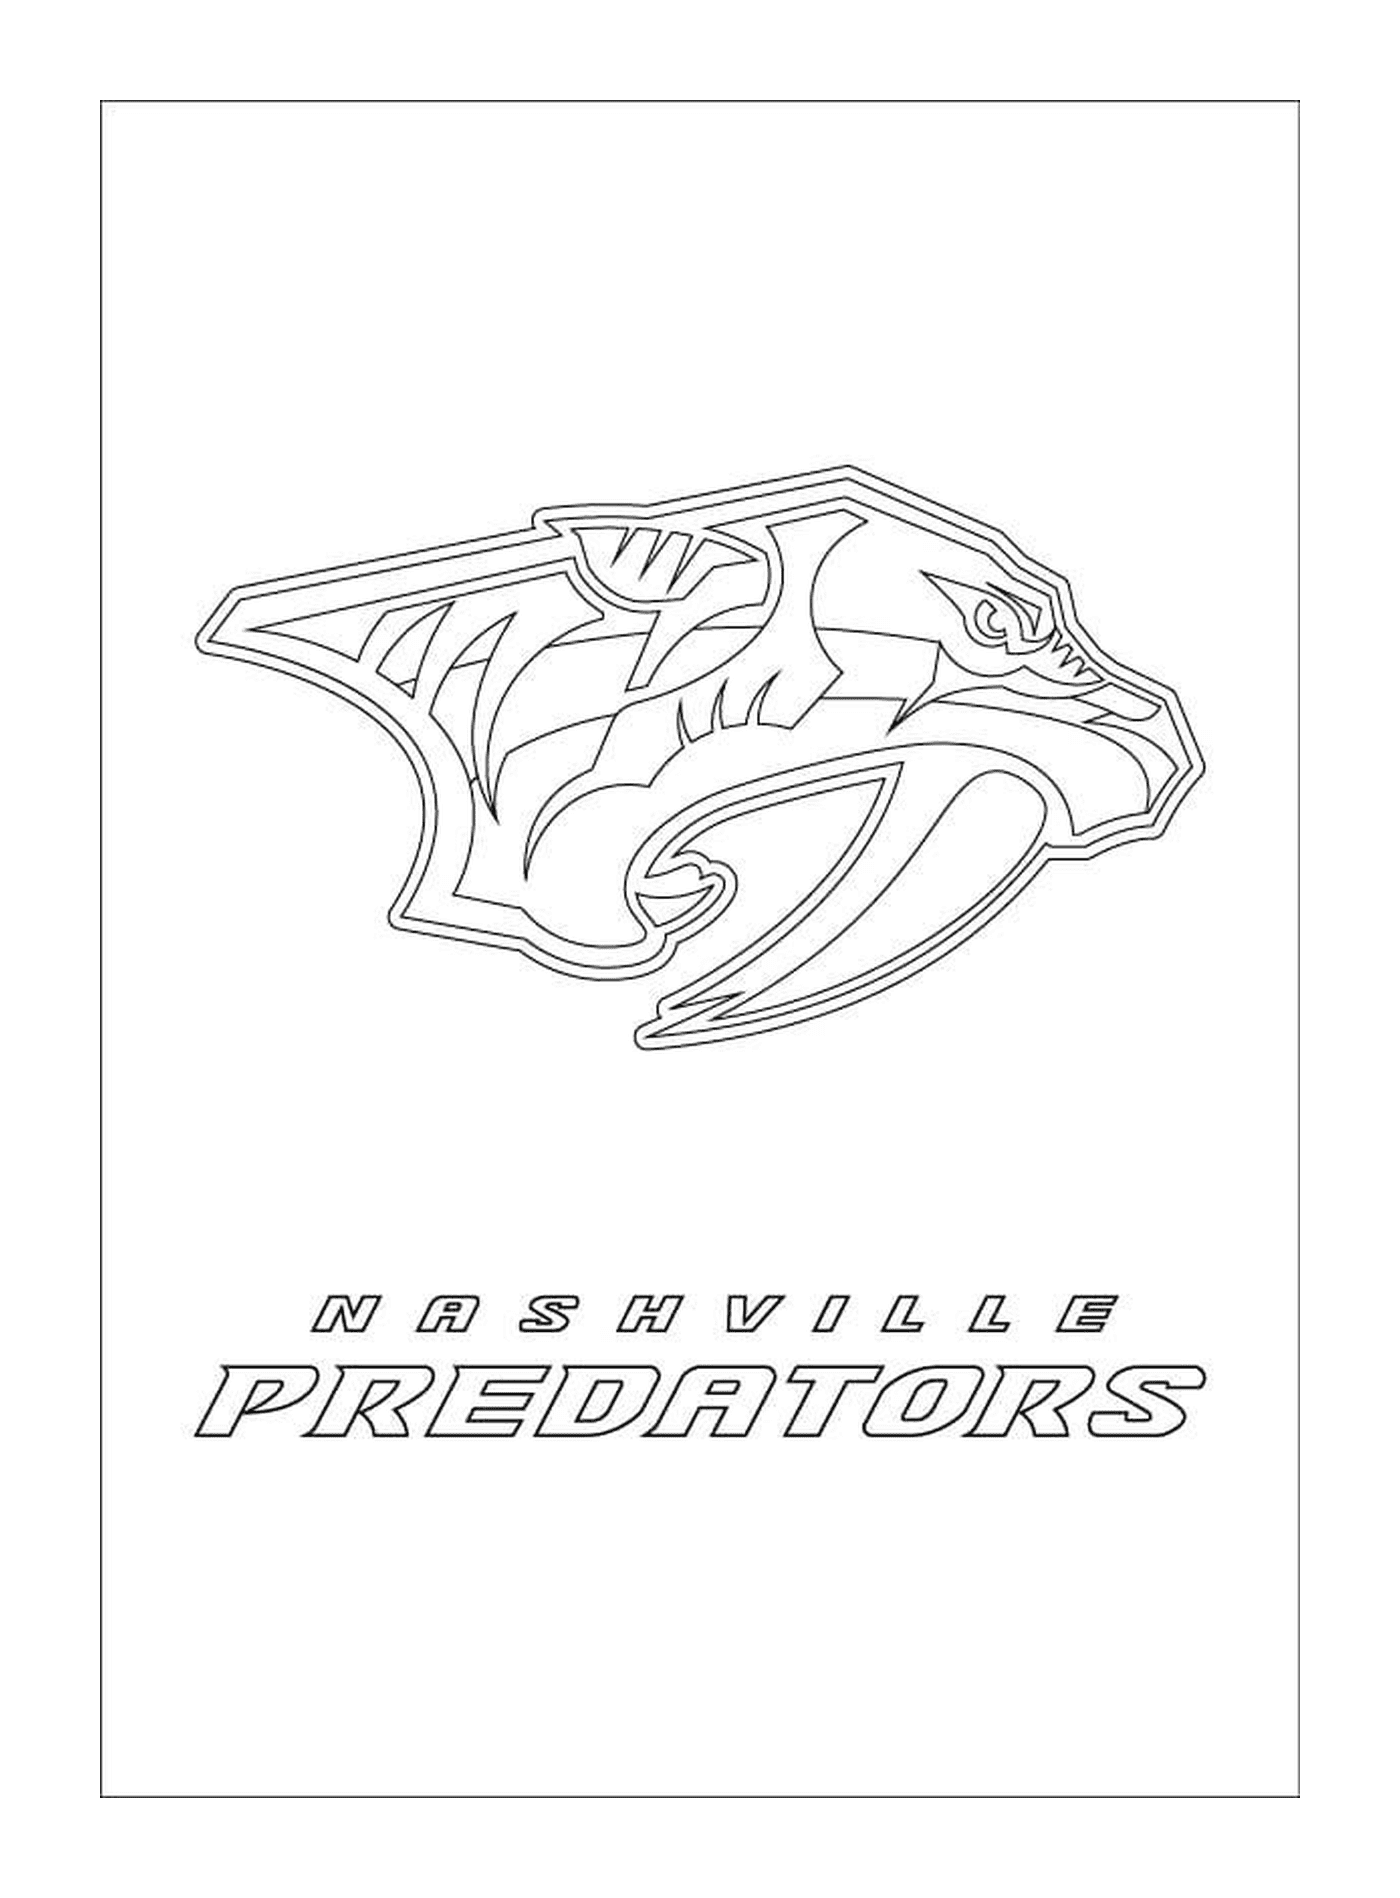  Логотип хищников Нэшвилля 